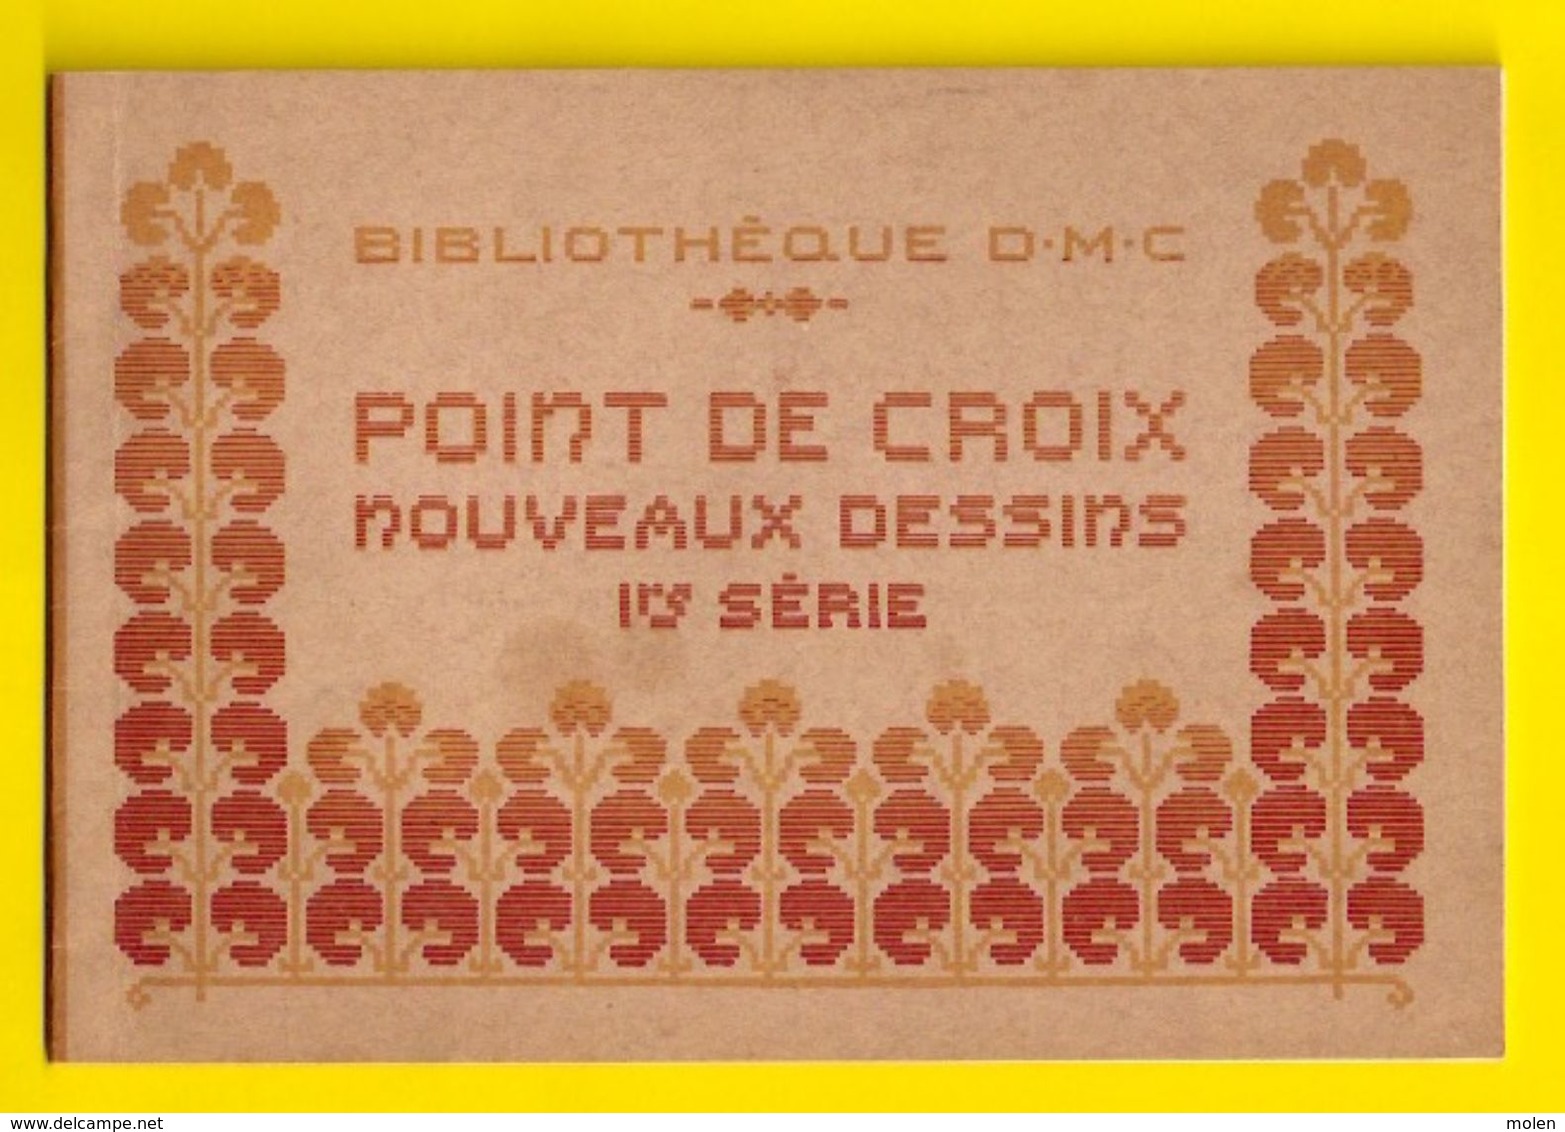 POINT DE CROIX 1re Serie Ca1900 BIBLIOTHEQUE D.M.C. BRODERIE CROSS STITCH Borduurwerk BRODEUSE DENTELLE KRUISSTEEK Z351 - Point De Croix